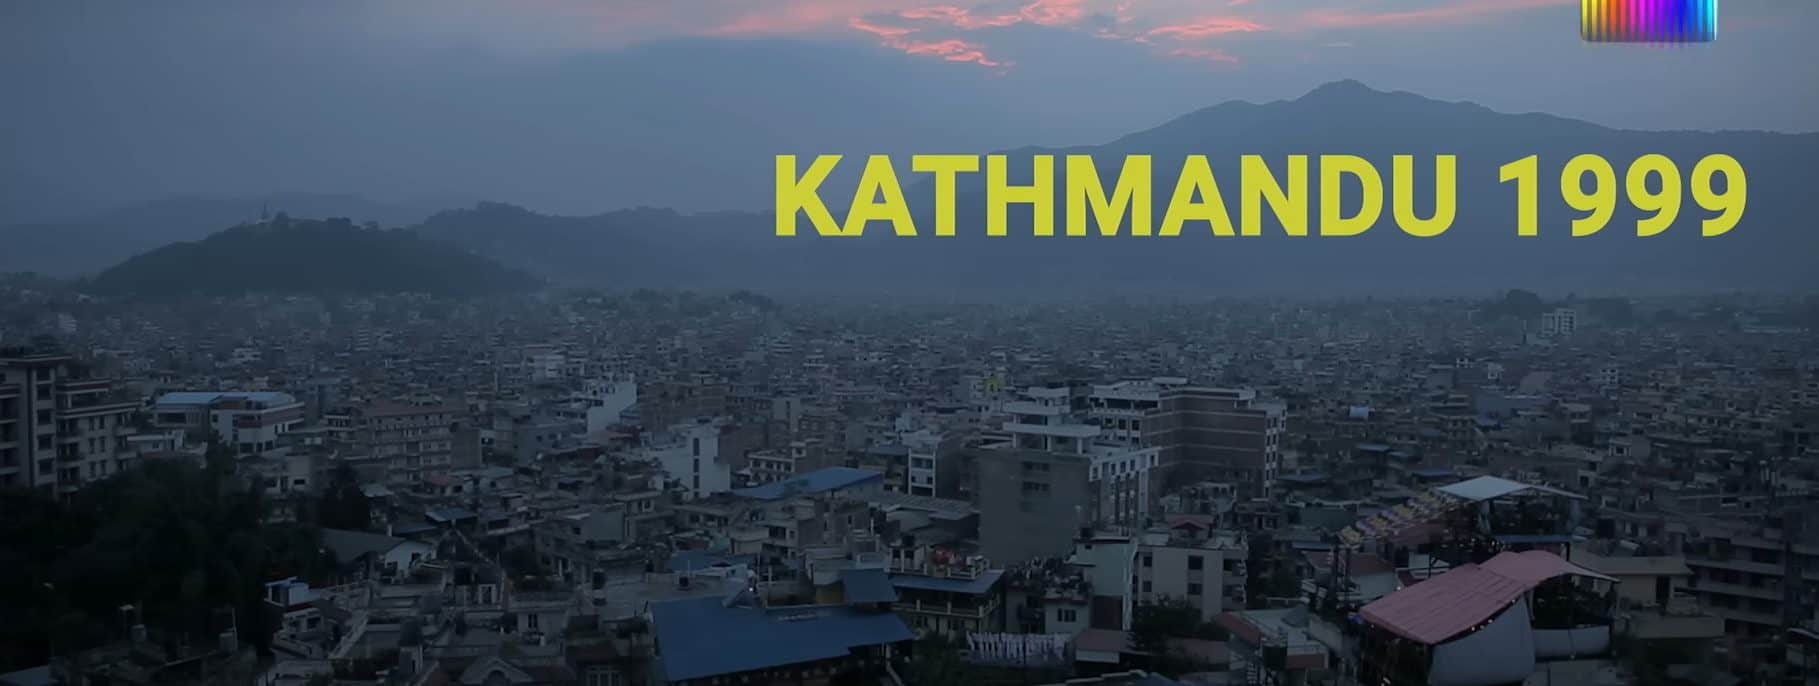 Kathmandu Connection Season 3 release date